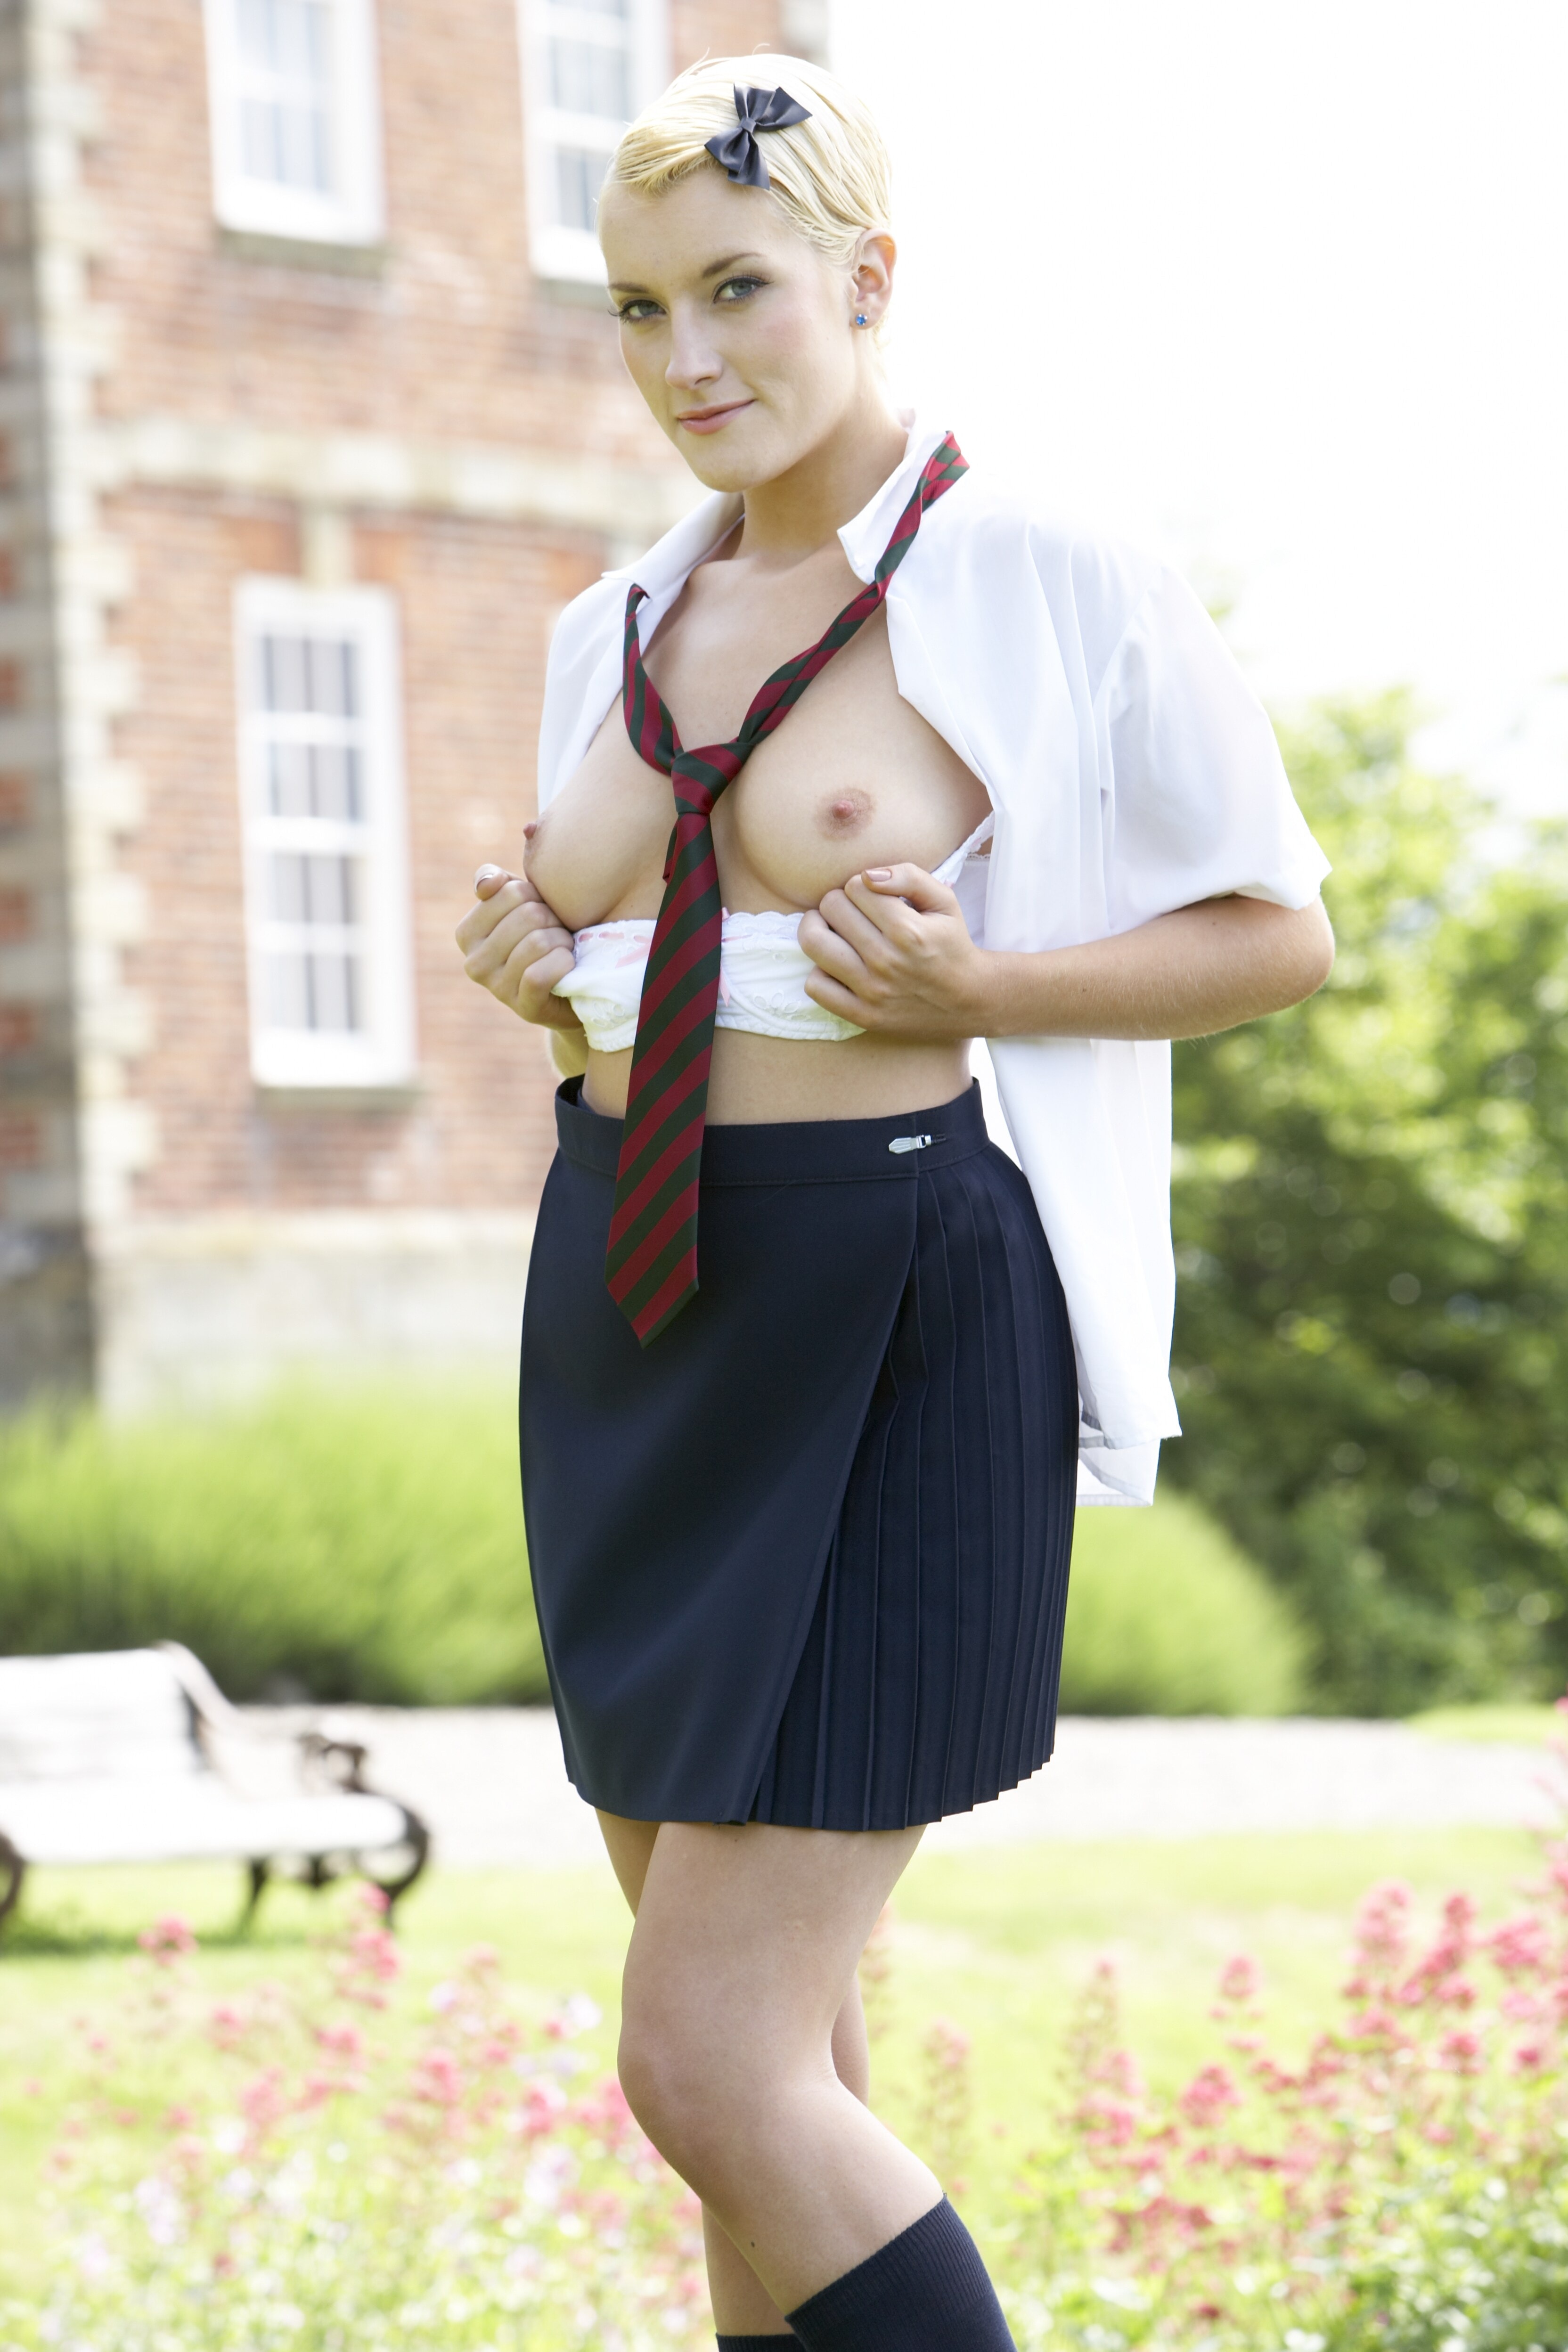 Harmony 'Young Harlots Riding School' starring Claudia Rossi (Photo 11)